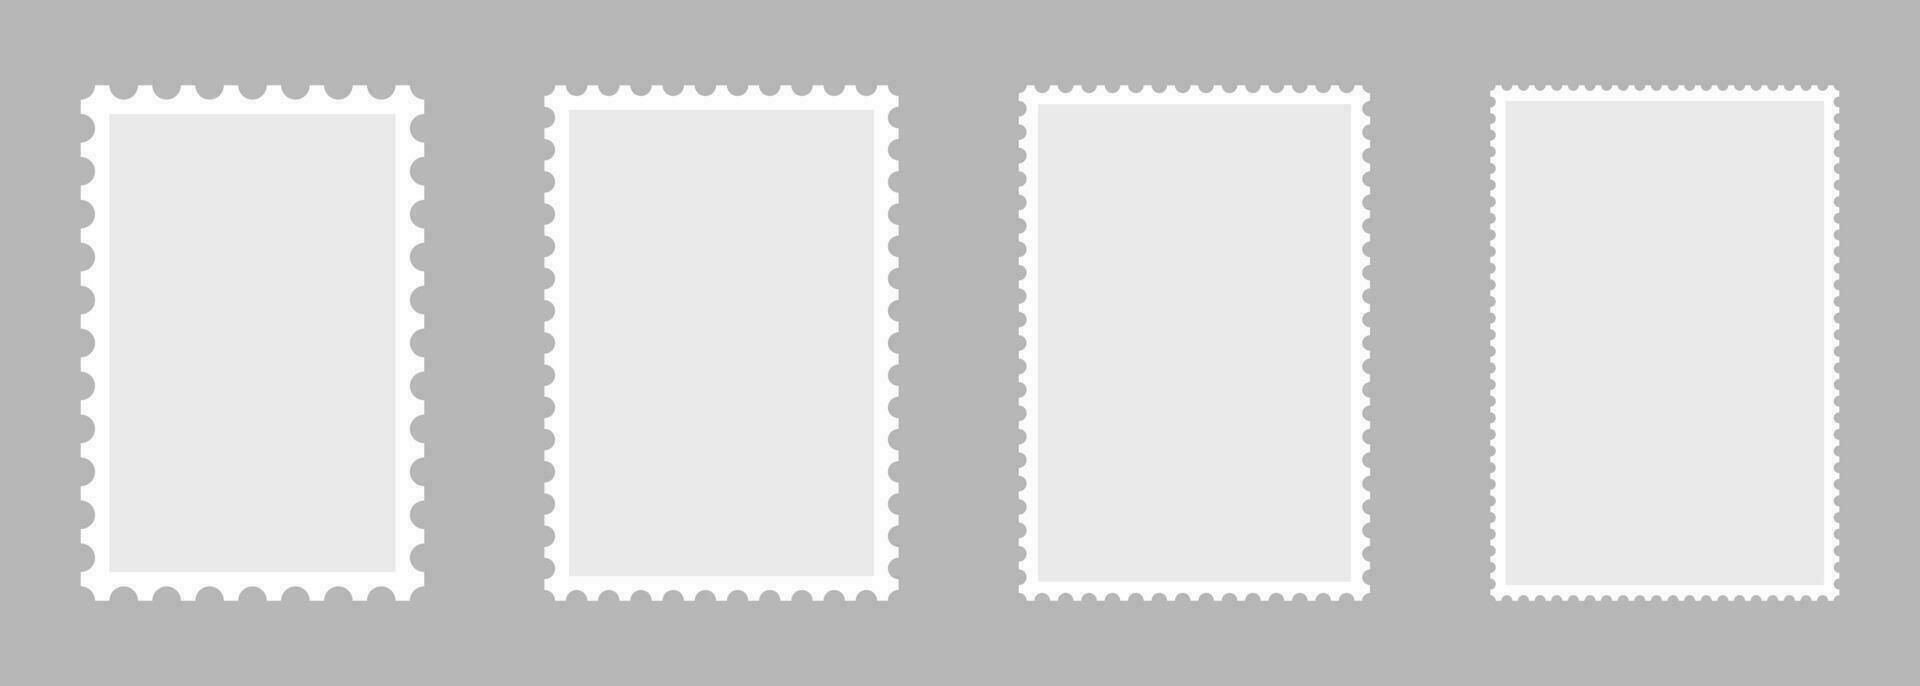 blanco conjunto de 4 4 gastos de envío sellos papel matasellos para correo letra aislado en gris antecedentes. vector ilustración.